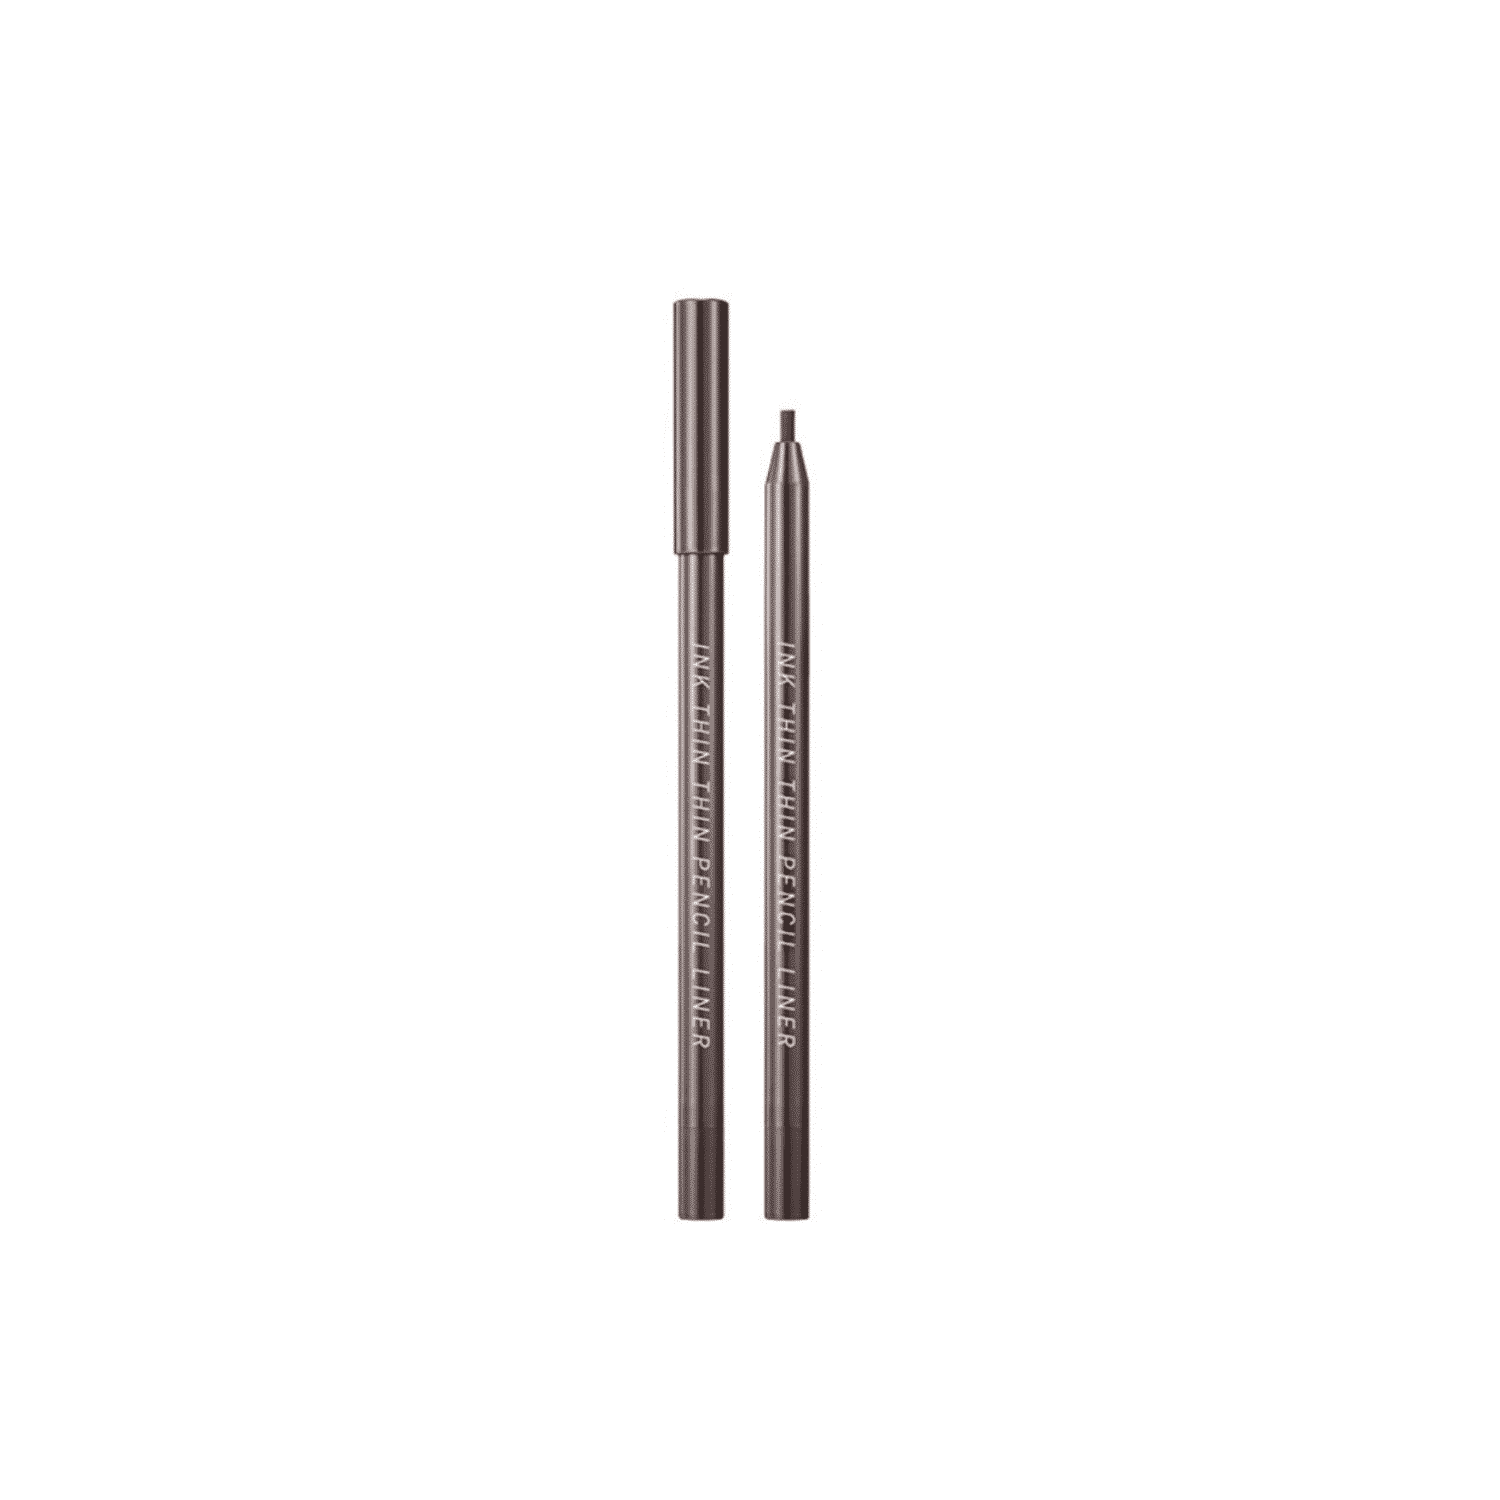 INK THIN THIN PENCIL LINER 02 CACAO BROWN - Arumi Korean Cosmetics